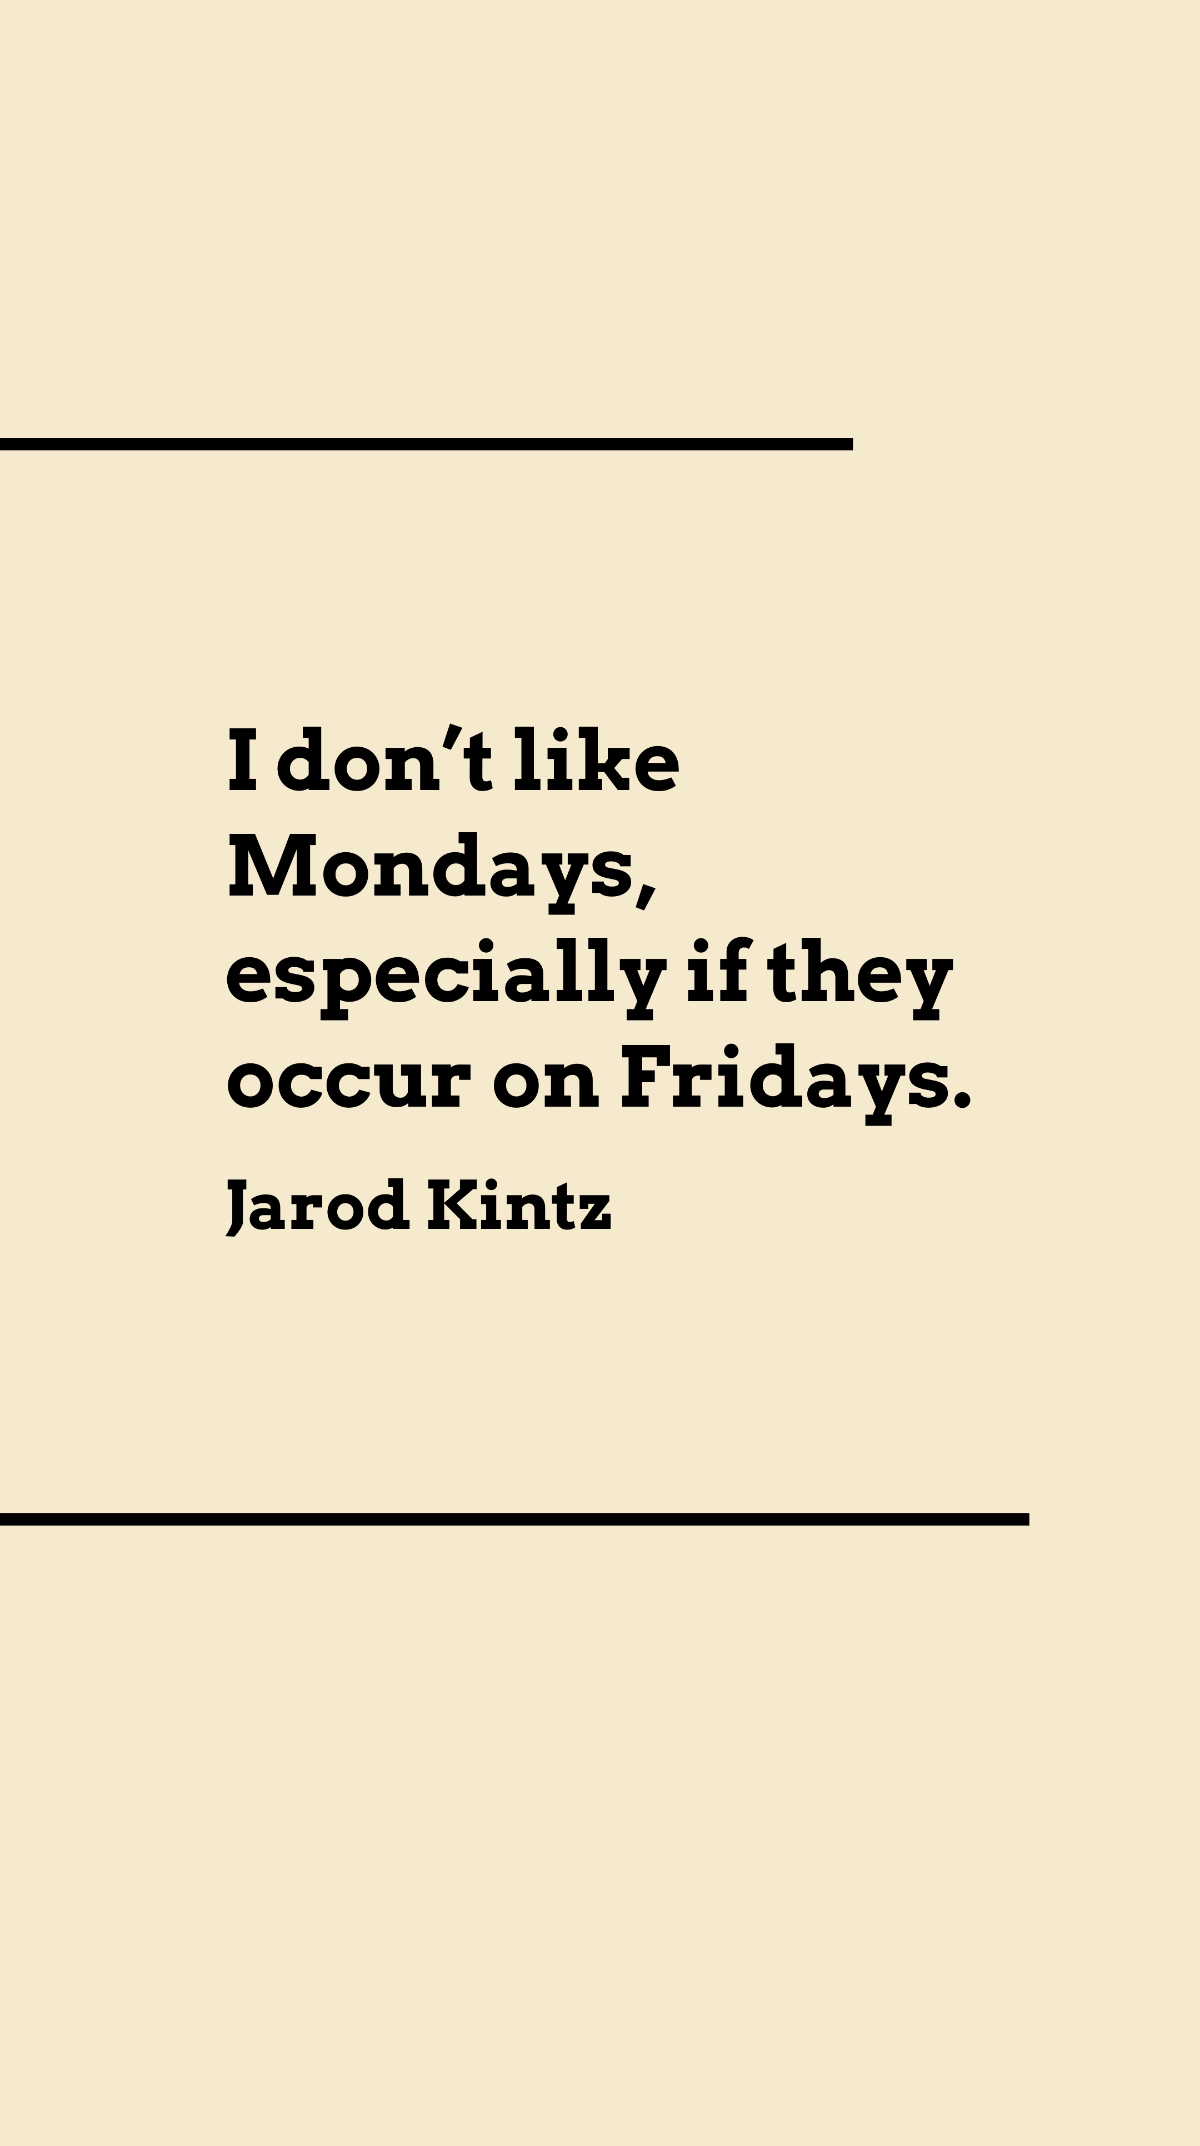 Jarod Kintz - I don’t like Mondays, especially if they occur on Fridays.